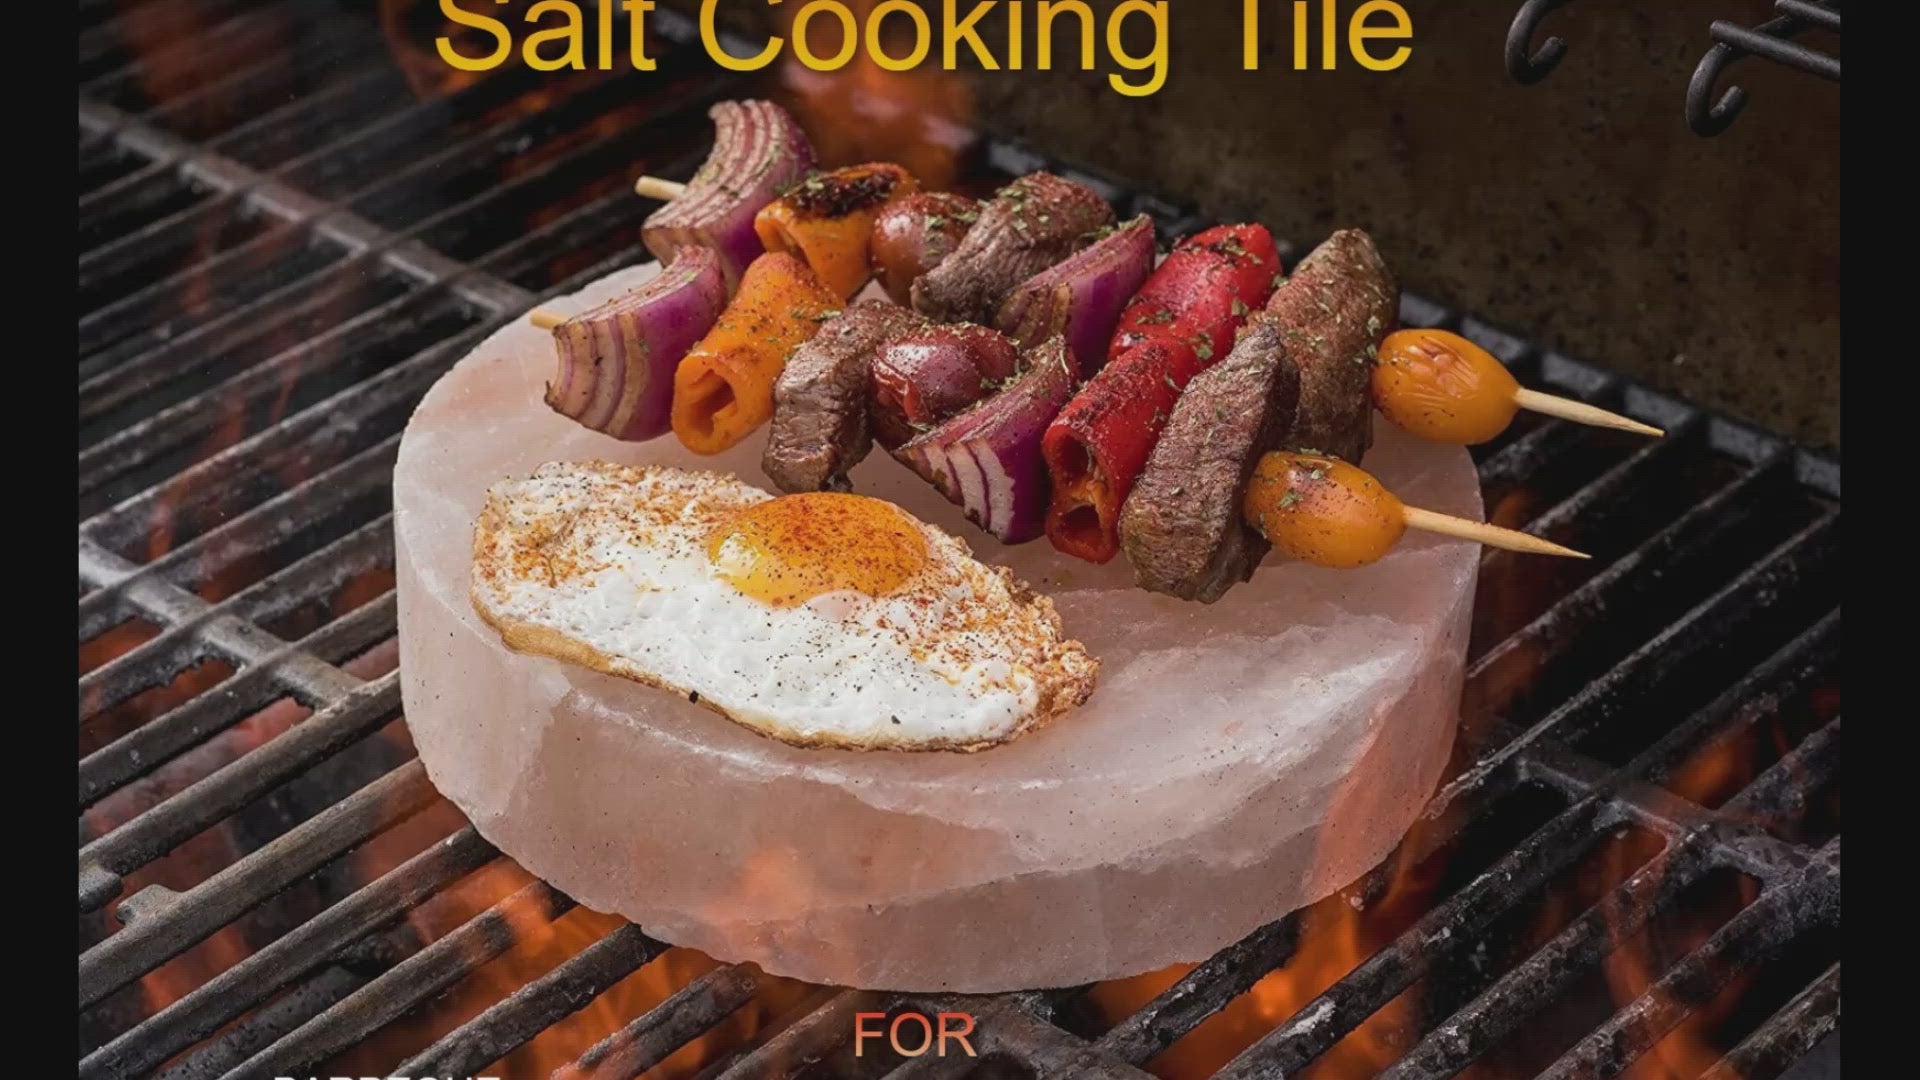 Natural Himalayan Salt Block Plate for Cooking, Grilling, Cutting